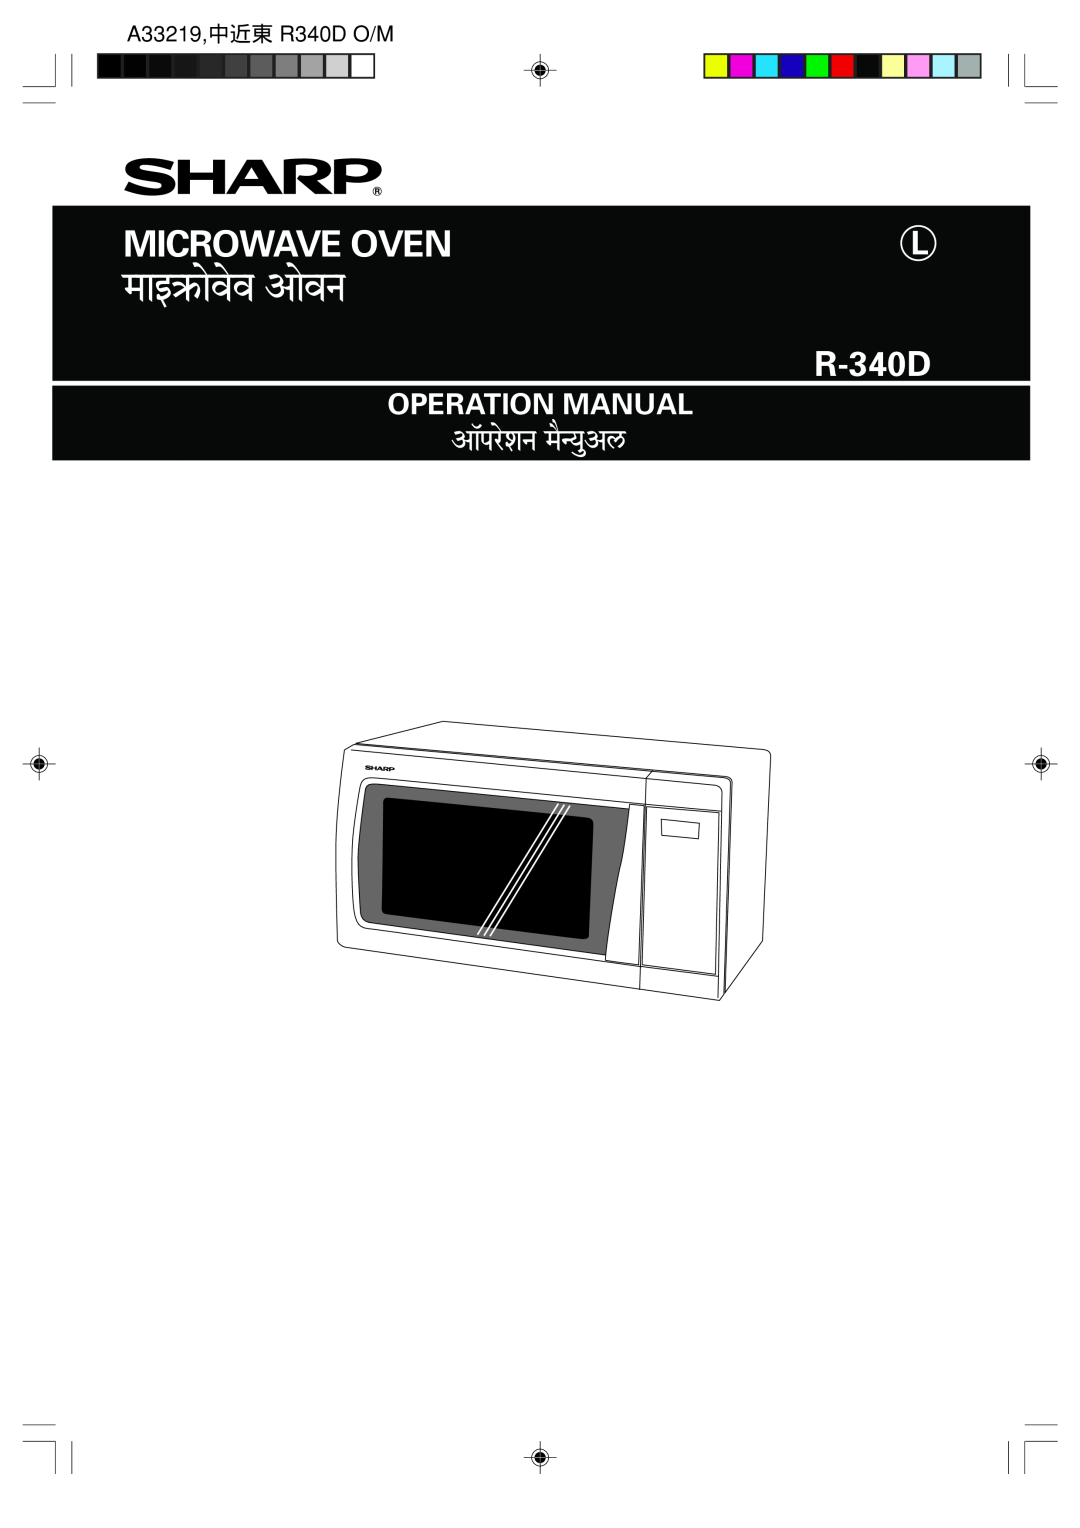 Sharp R-340D operation manual A33219,中近東 R340D O/M, maAî§aãovaeva åovana, Microwave Oven 